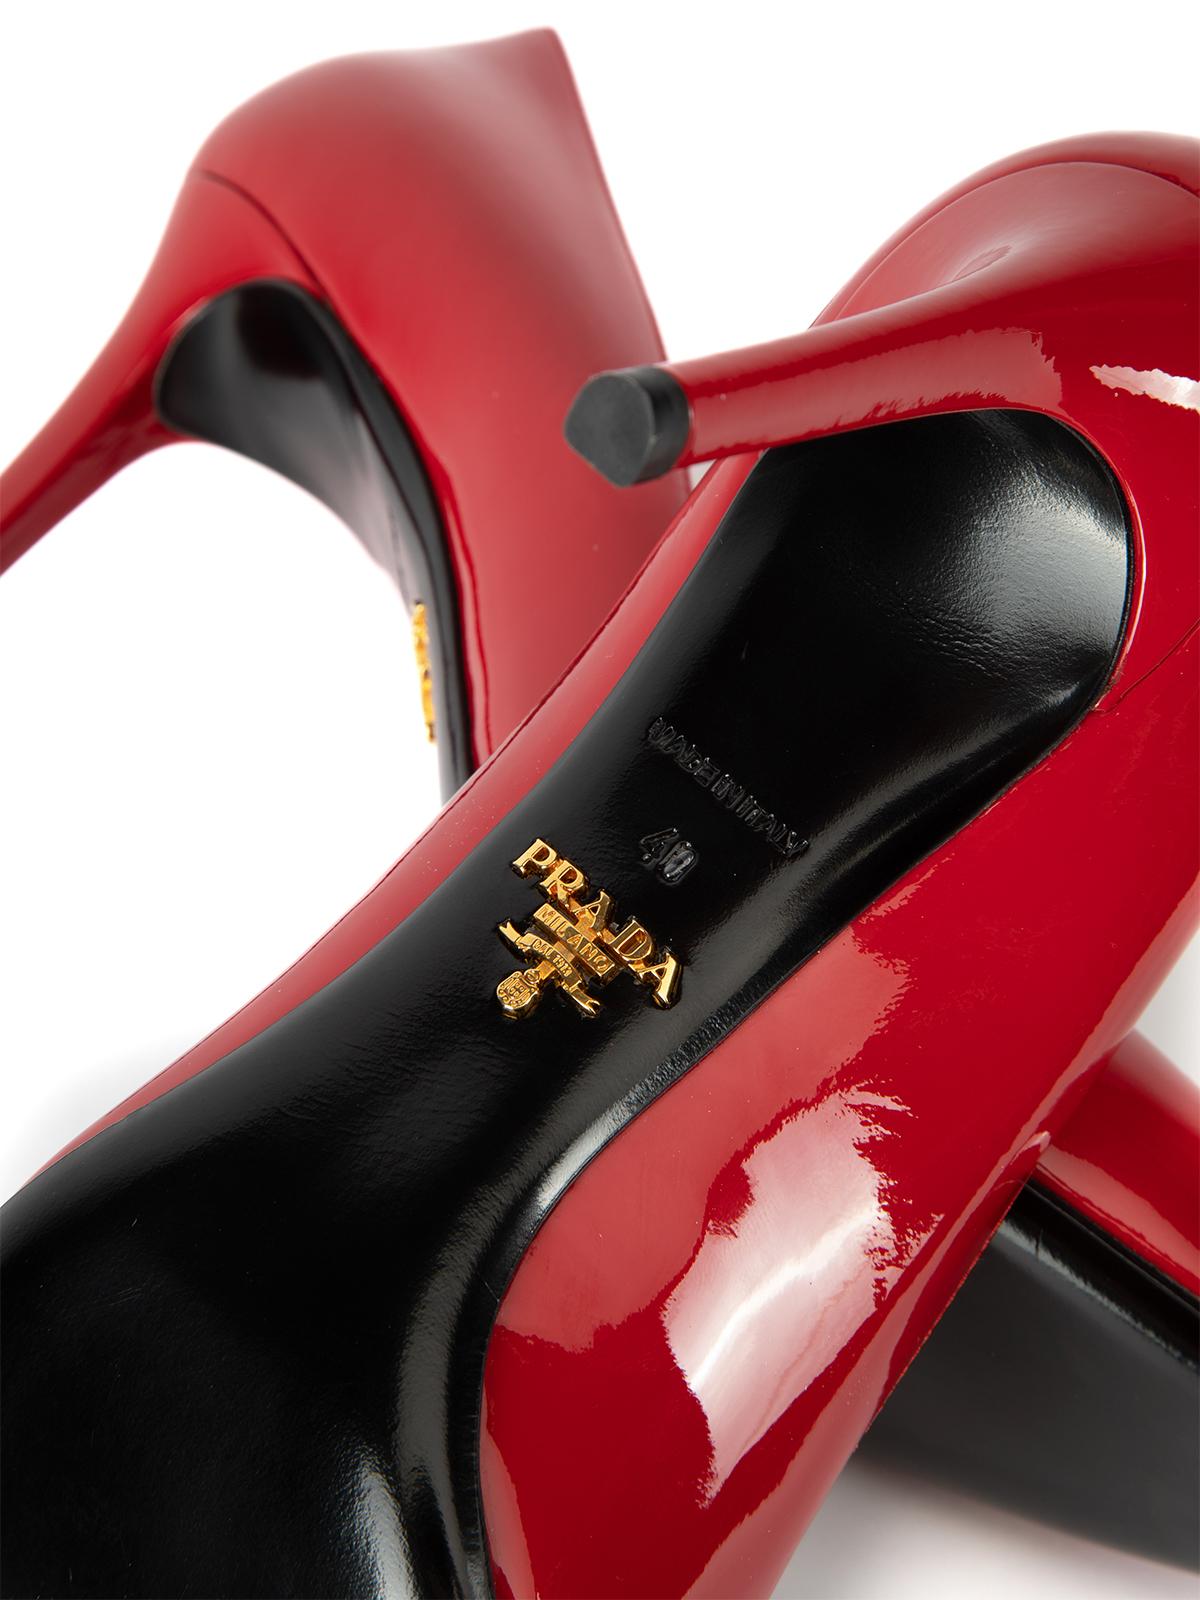 Prada Women's Calzature Donna Red Patent Leather Pumps 3